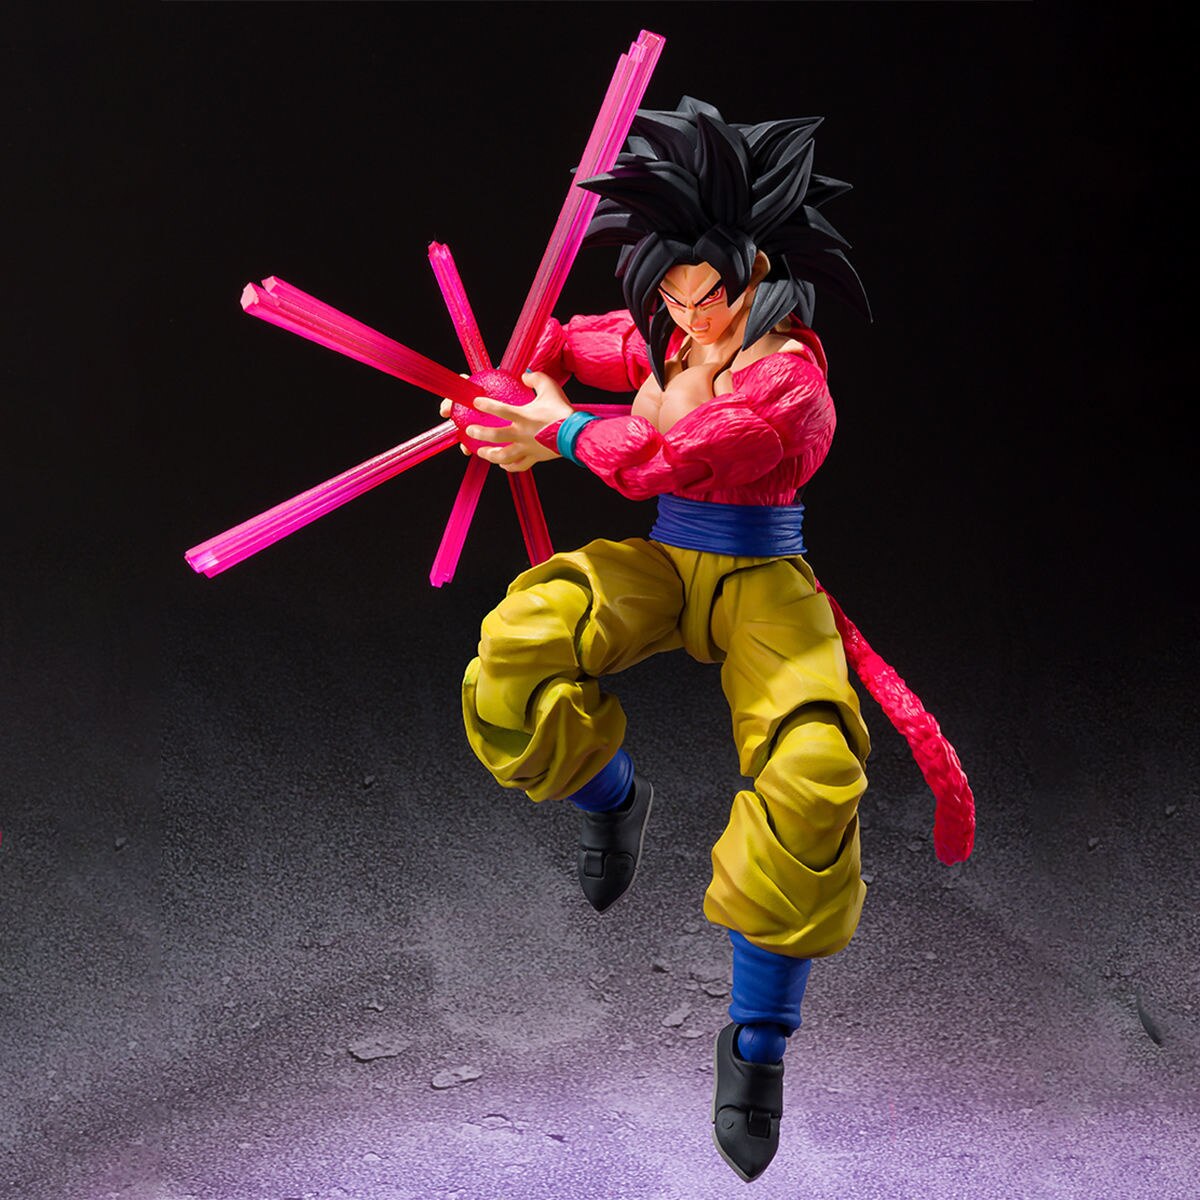 Black Goku Action Figure Toy Model Gift - Dragon Ball Z Merch